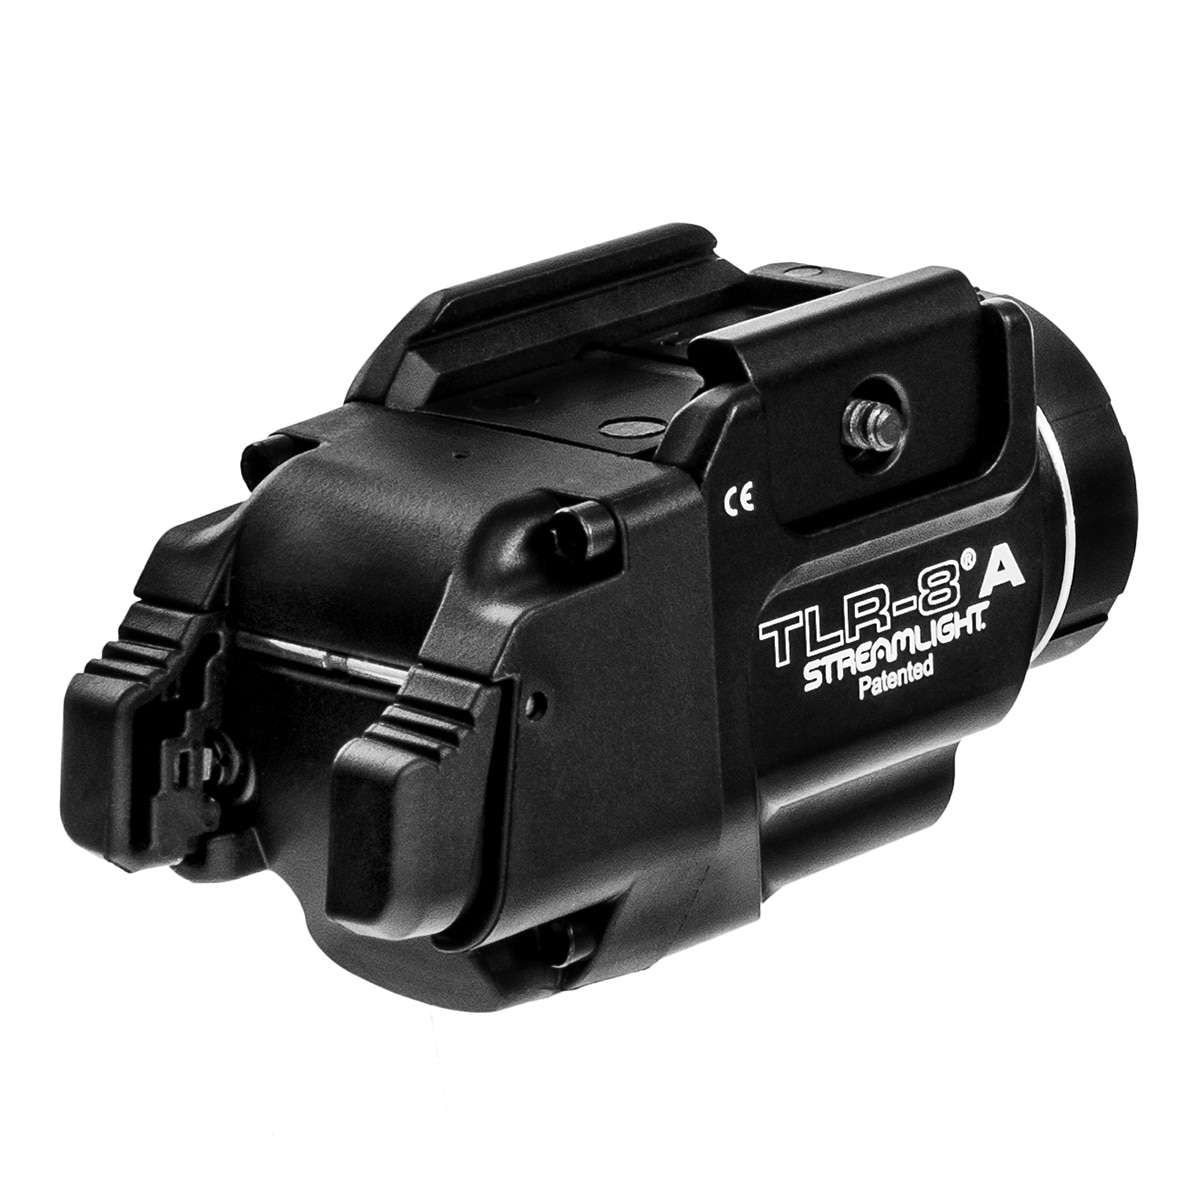 Ліхтарик для зброї Streamlight TLR-8A - 500 люменів, Red Laser